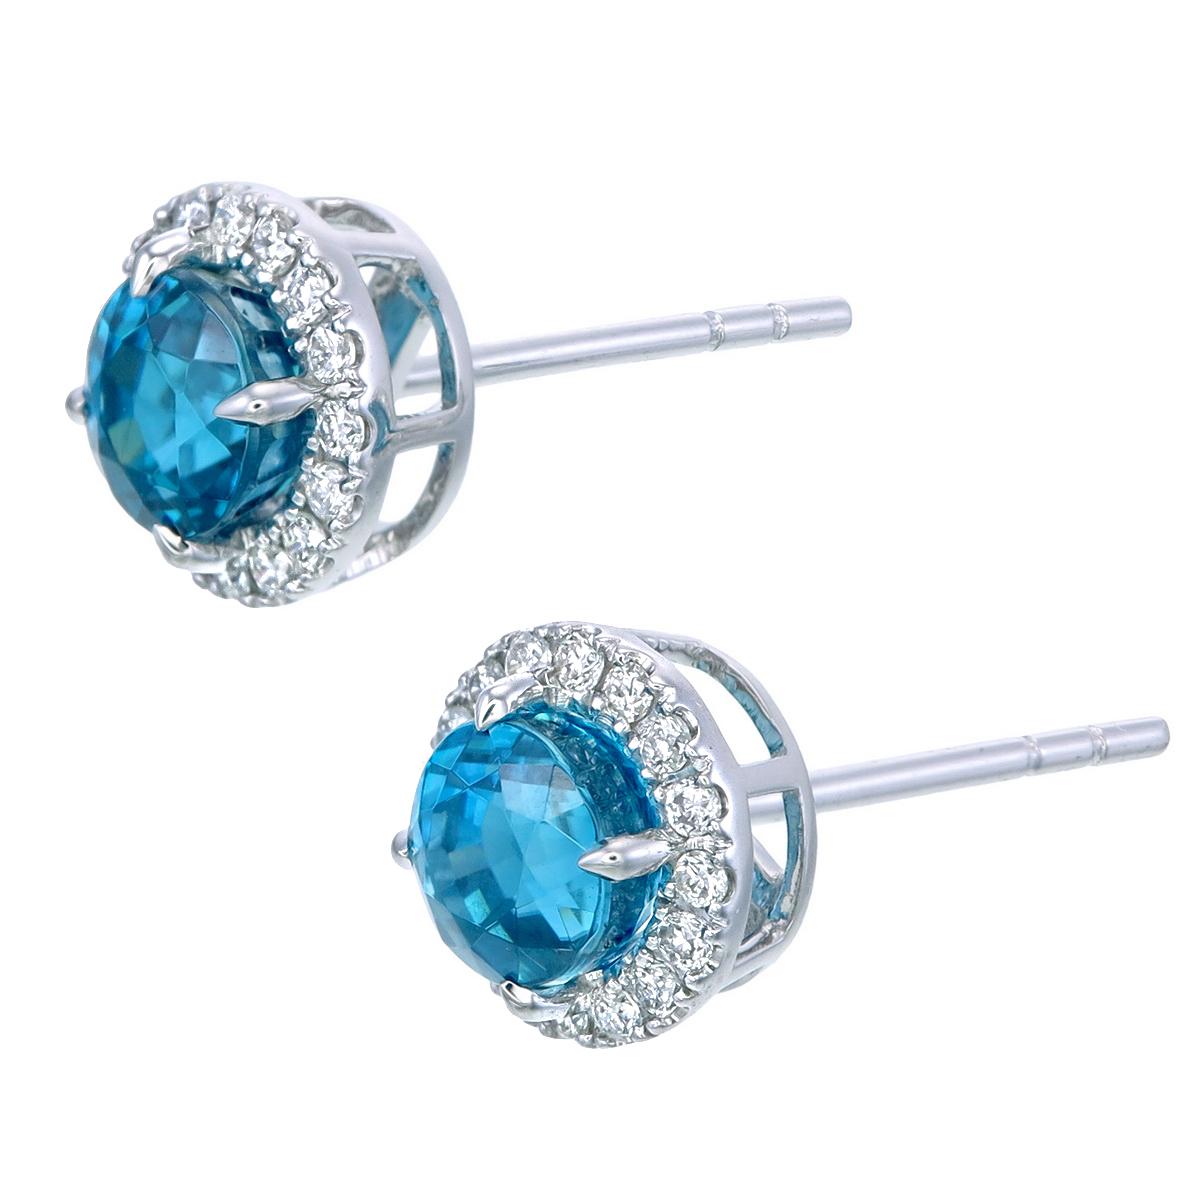 Contemporary Orloff of Denmark, 3.25 ct Ocean Blue Zircon Diamond Earrings in 14K White Gold For Sale